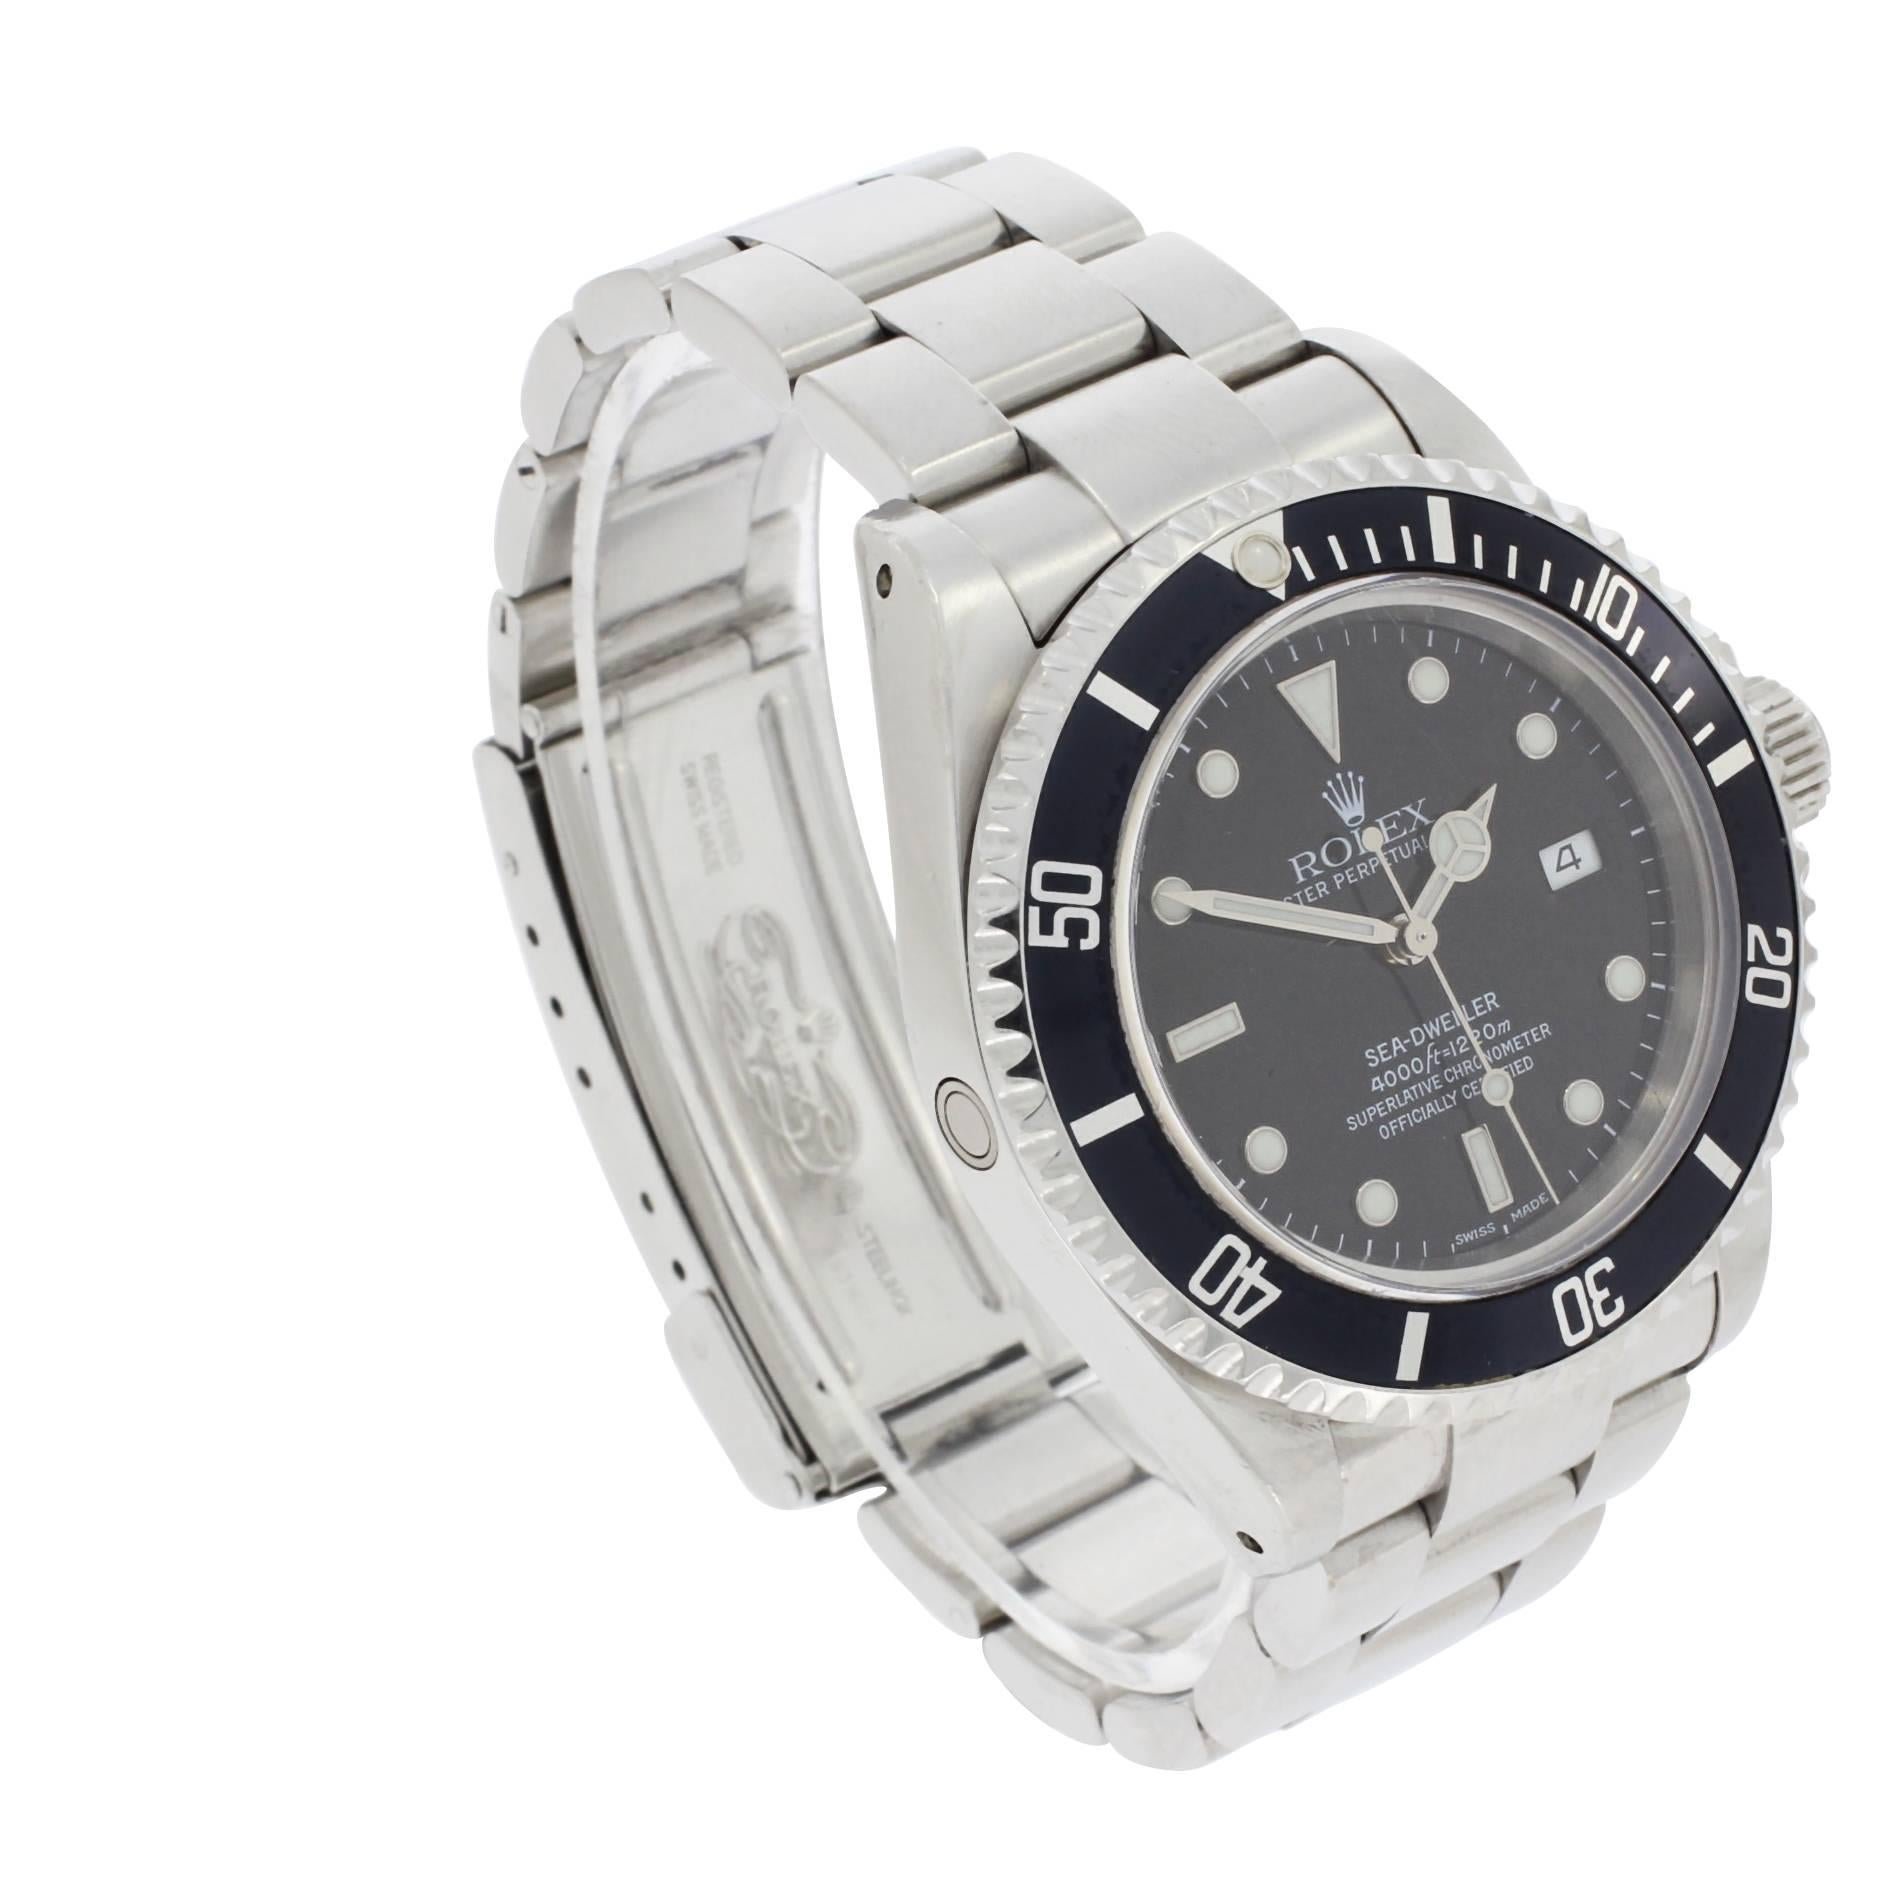 Rolex Stainless Steel Sea-Dweller Wristwatch Ref 16660, 2001 For Sale 3